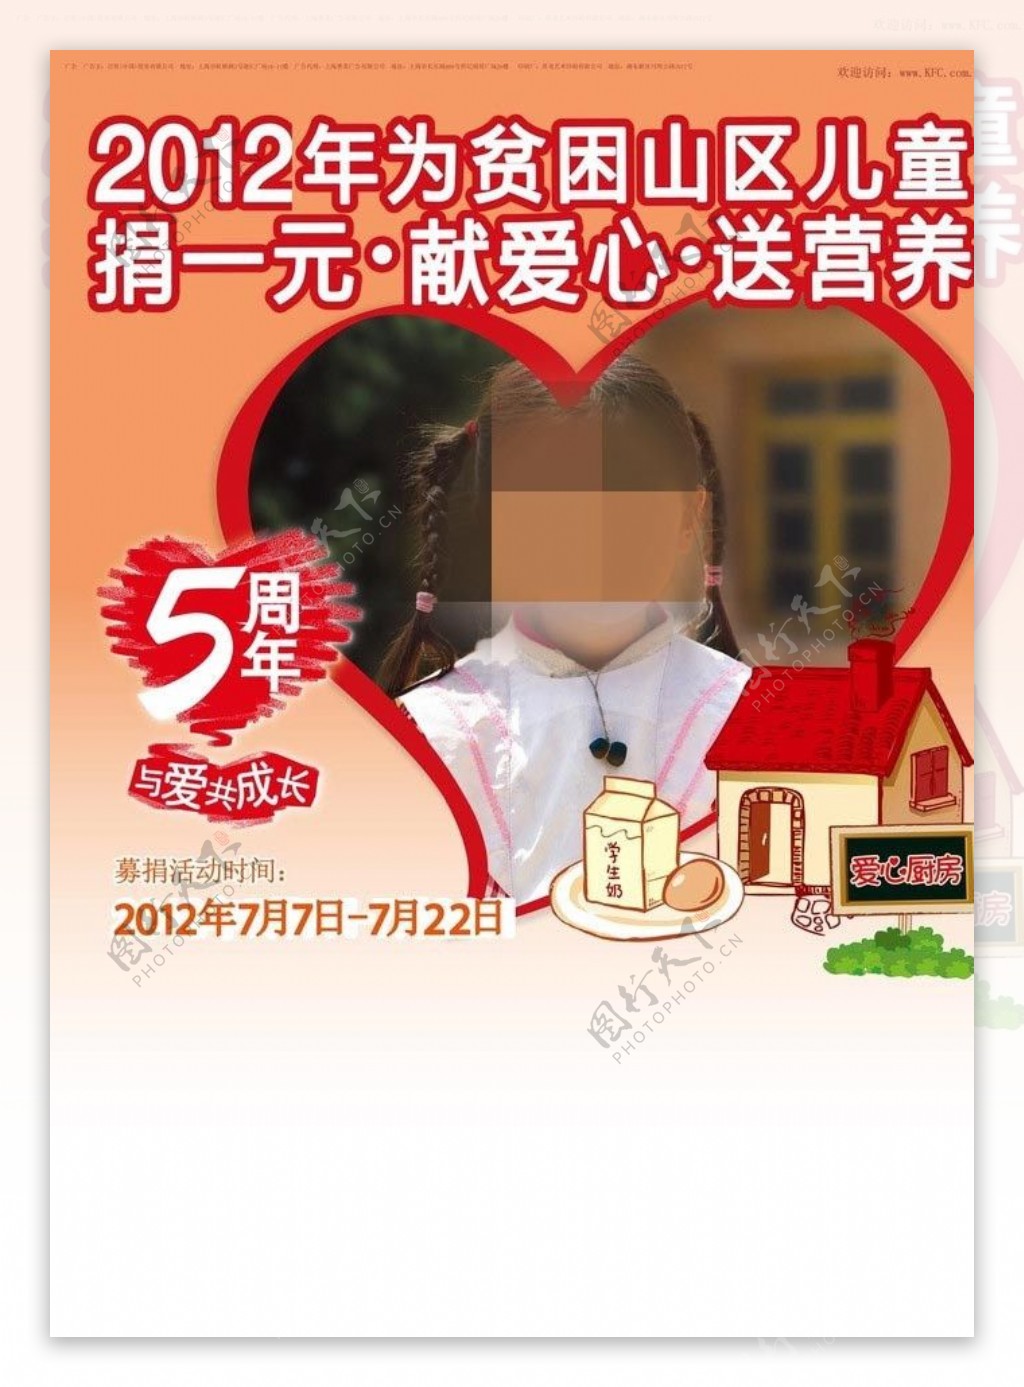 2012KFC捐一元活动海报